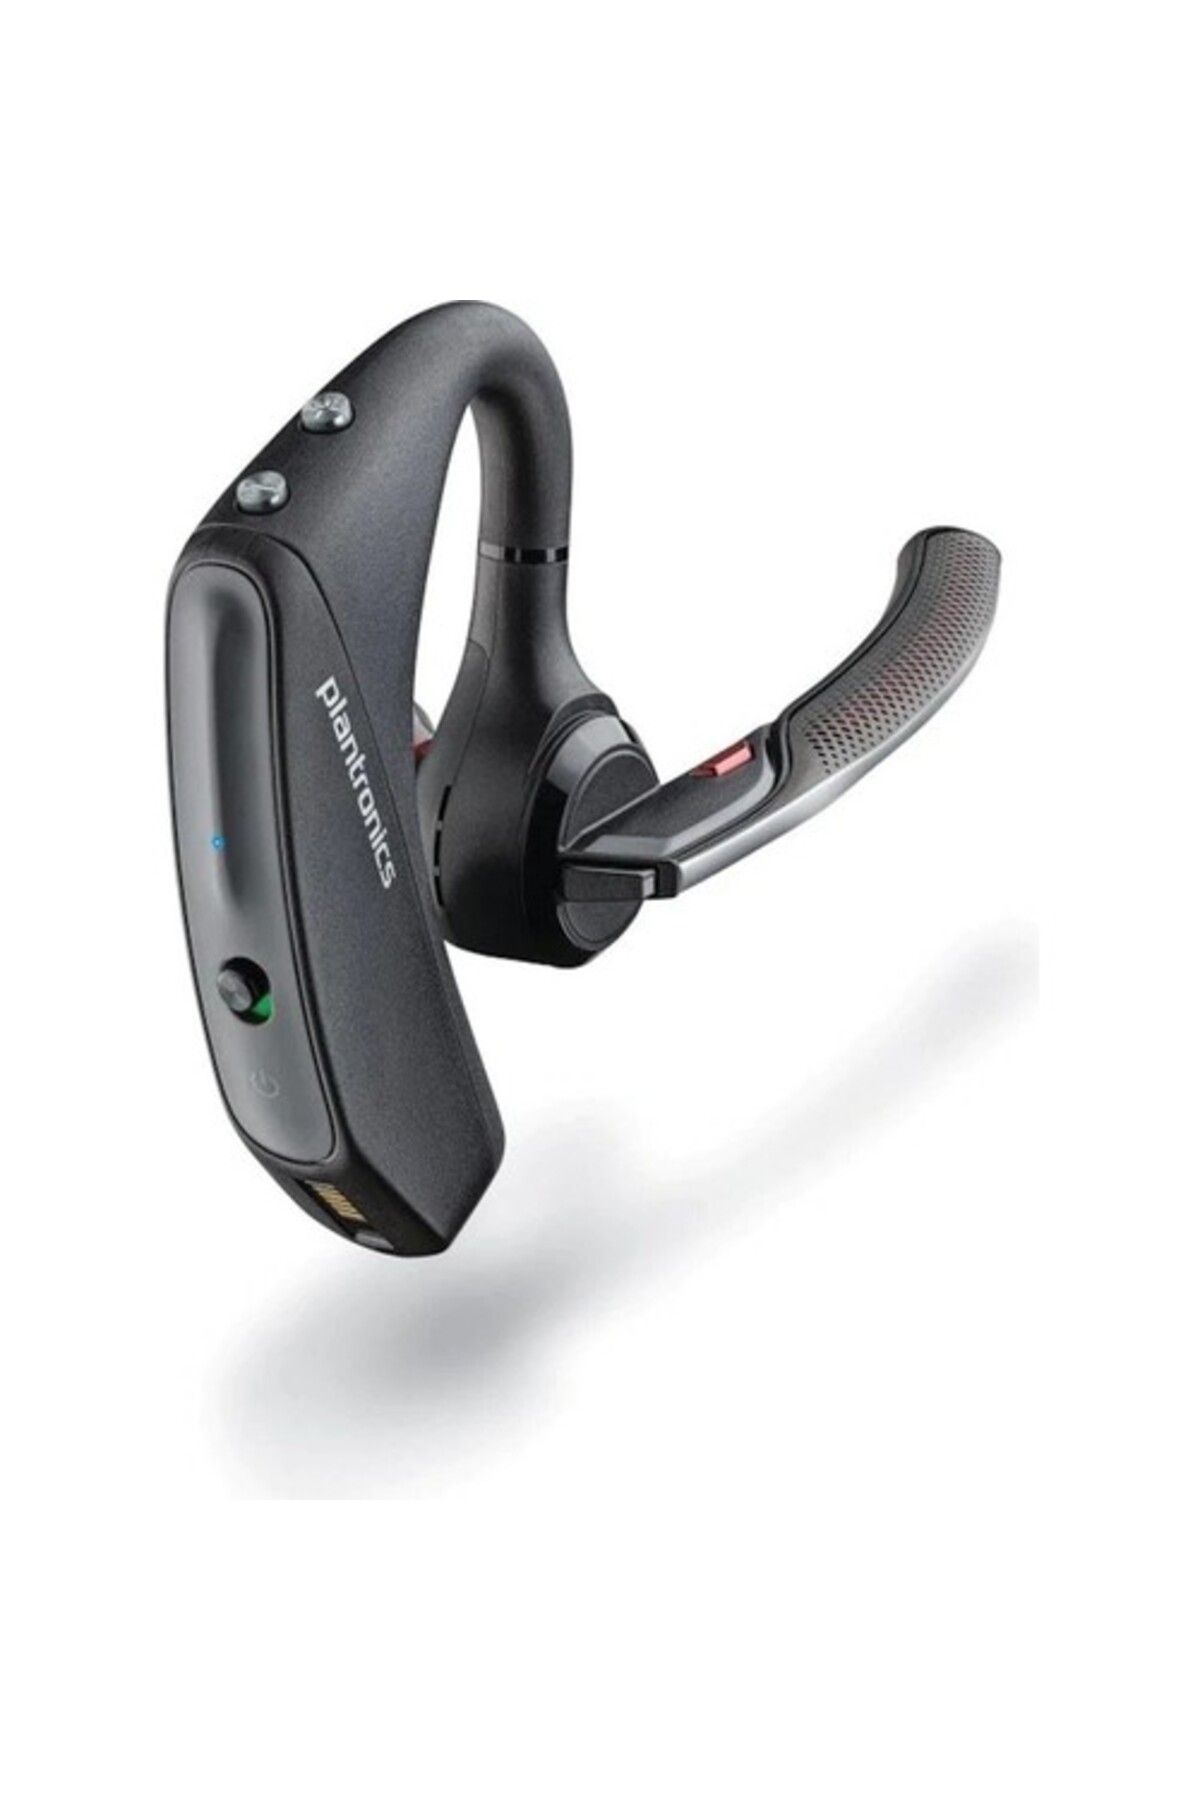 Plantronics Voyager 5200 Bluetooth Çift Telefon Ve Müzik Destekli Kulaklık